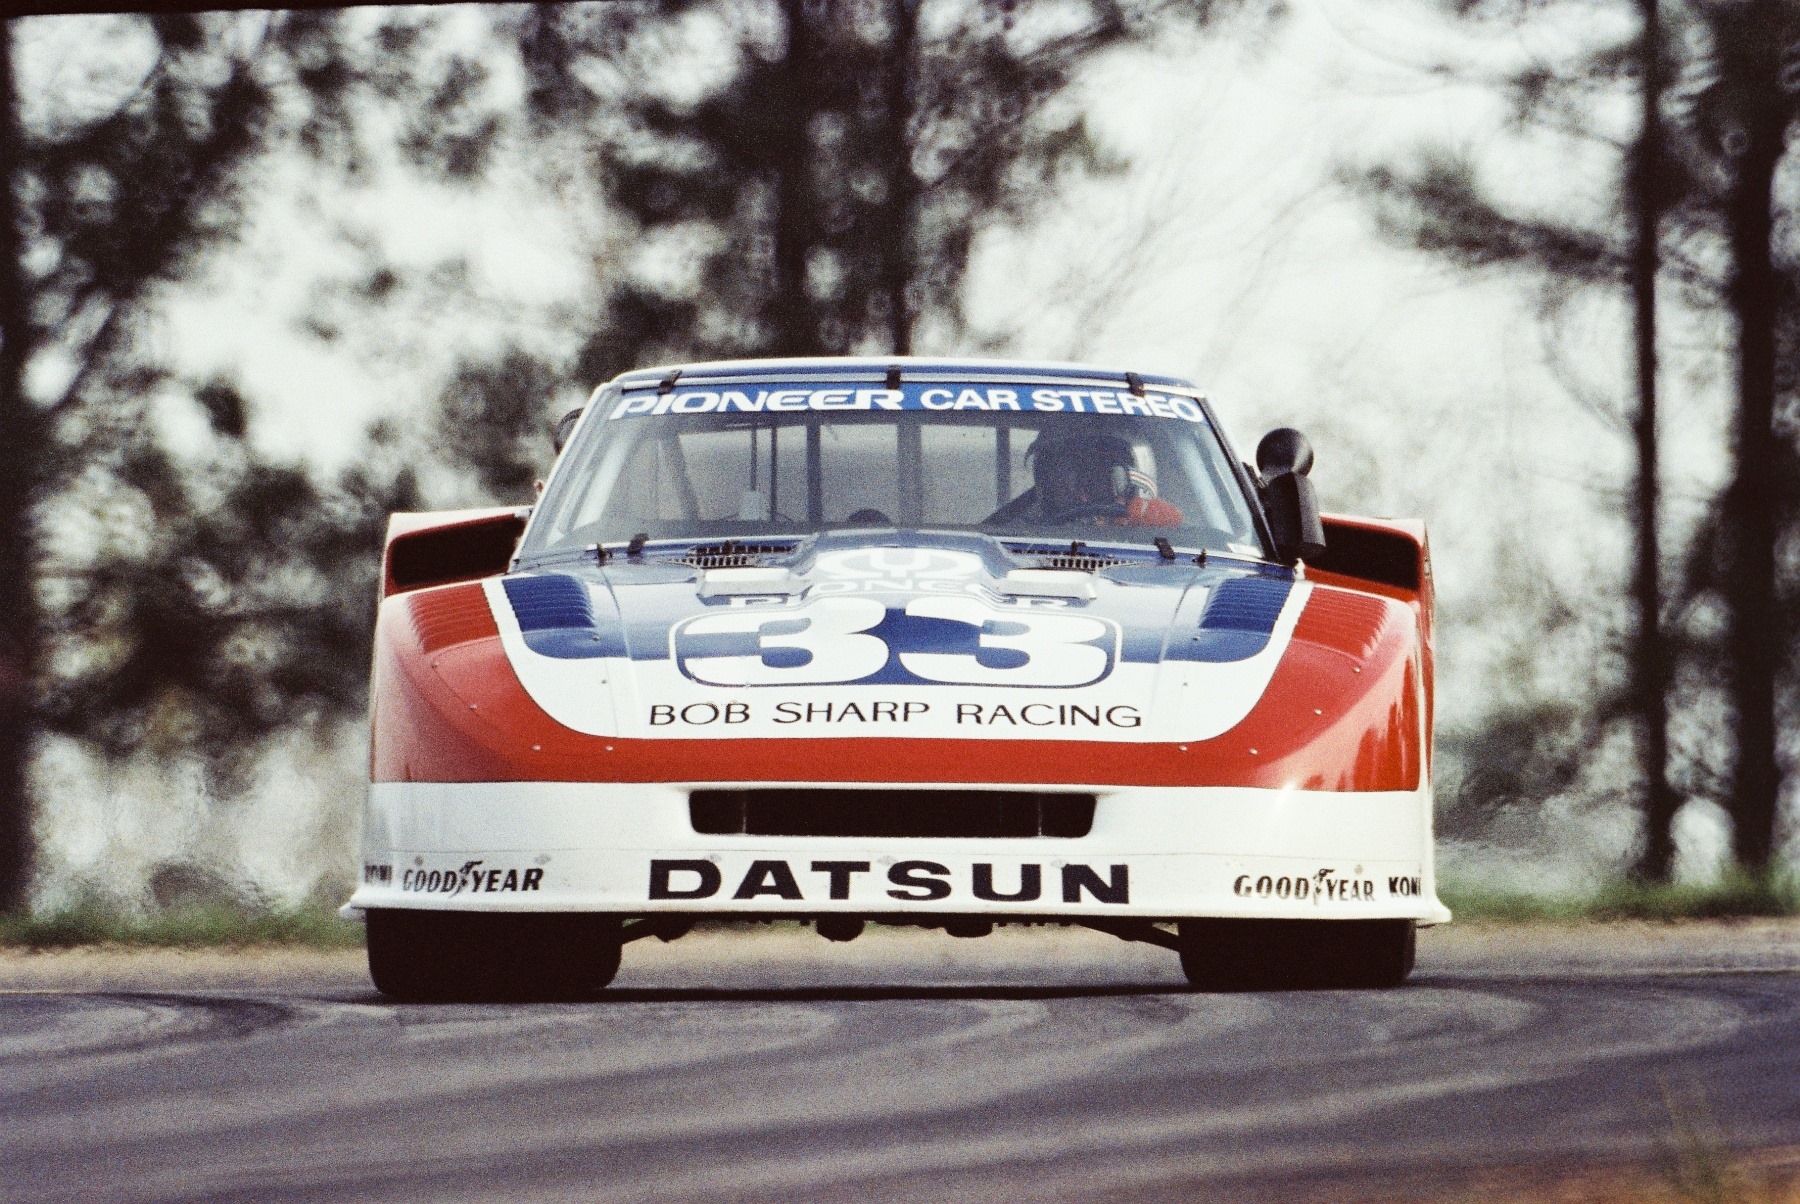 Life is race. Bob Sharp Datsun. Harsh Racing. Paul Newman Version Nissan ad.